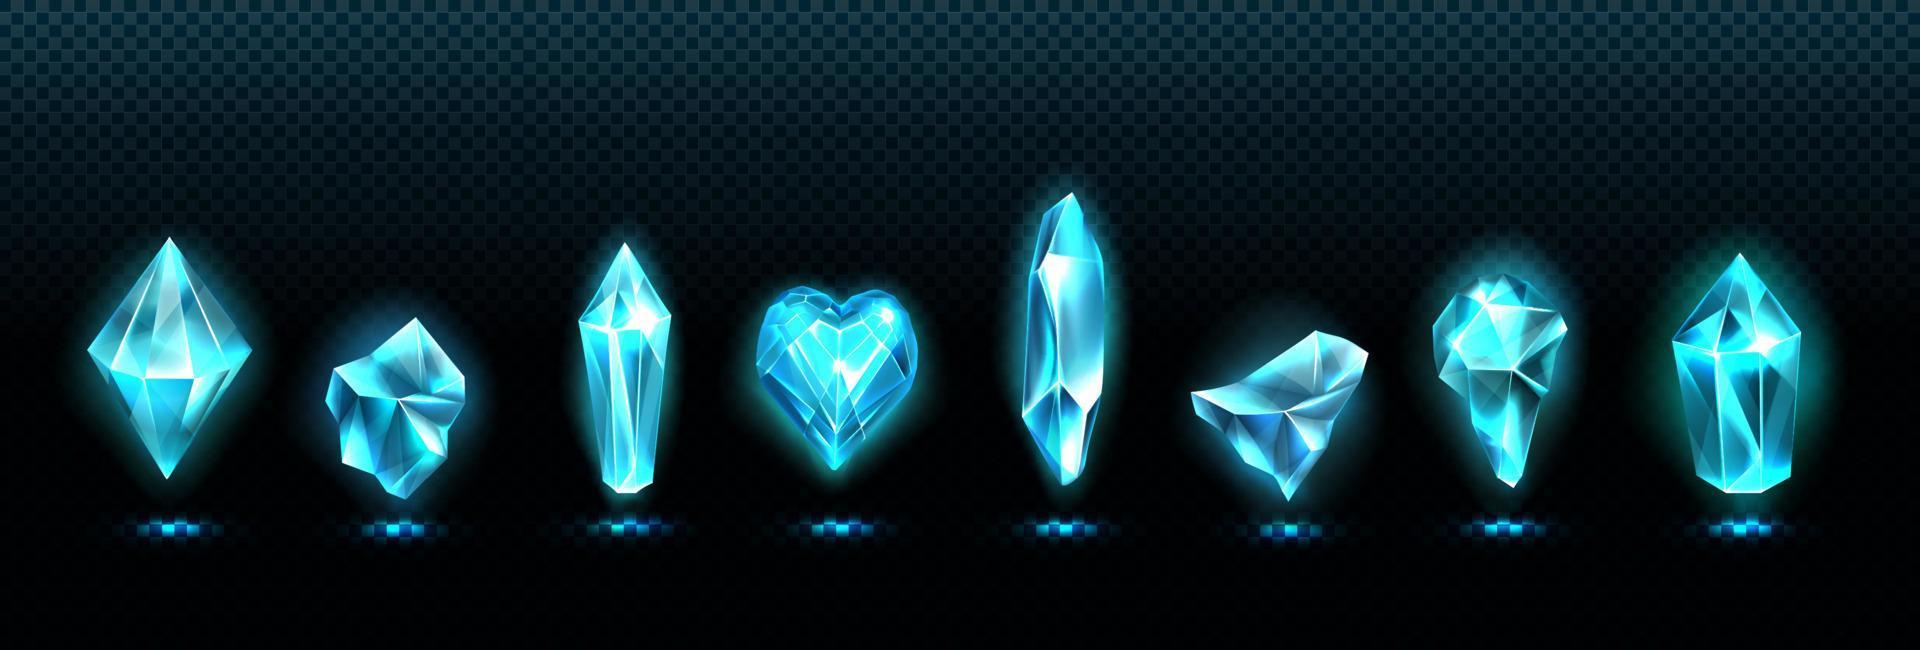 Precious emerald stones, shiny blue glass crystals vector